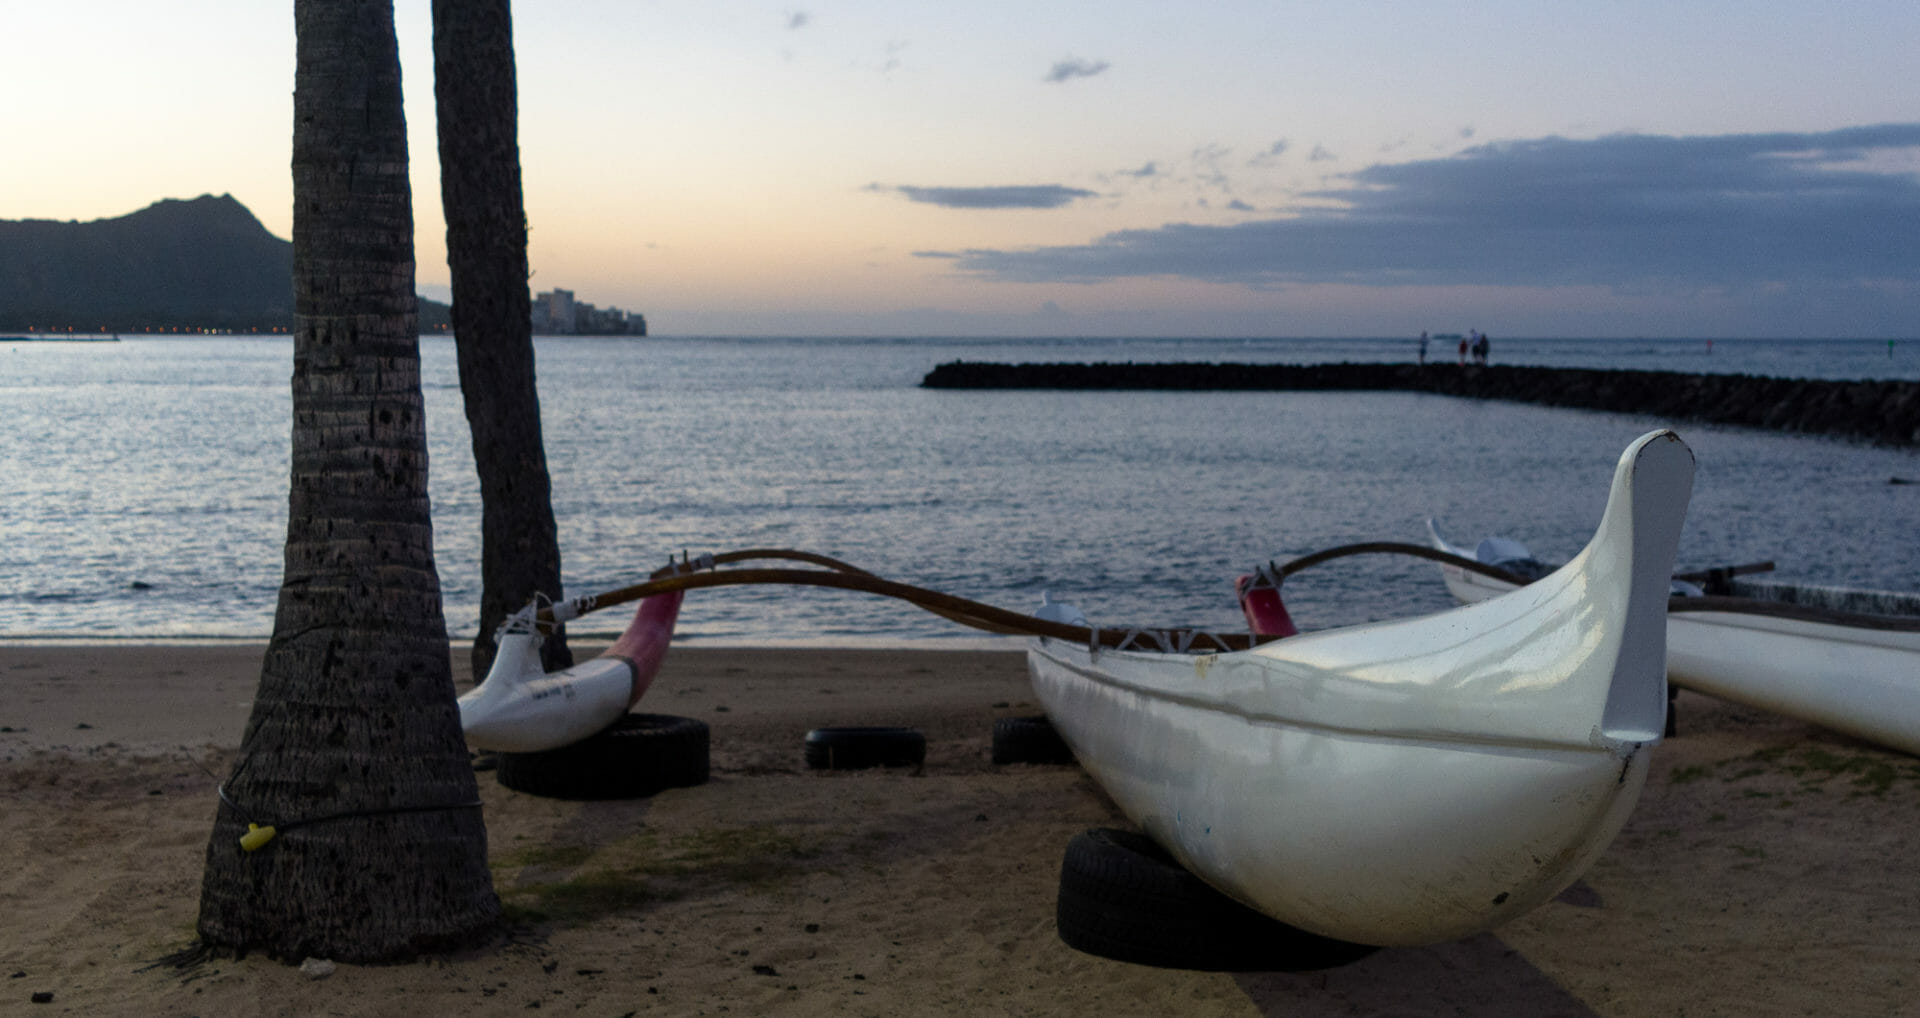 Outrigger canoe along the shore of Kahanamoku Beach in Waikiki